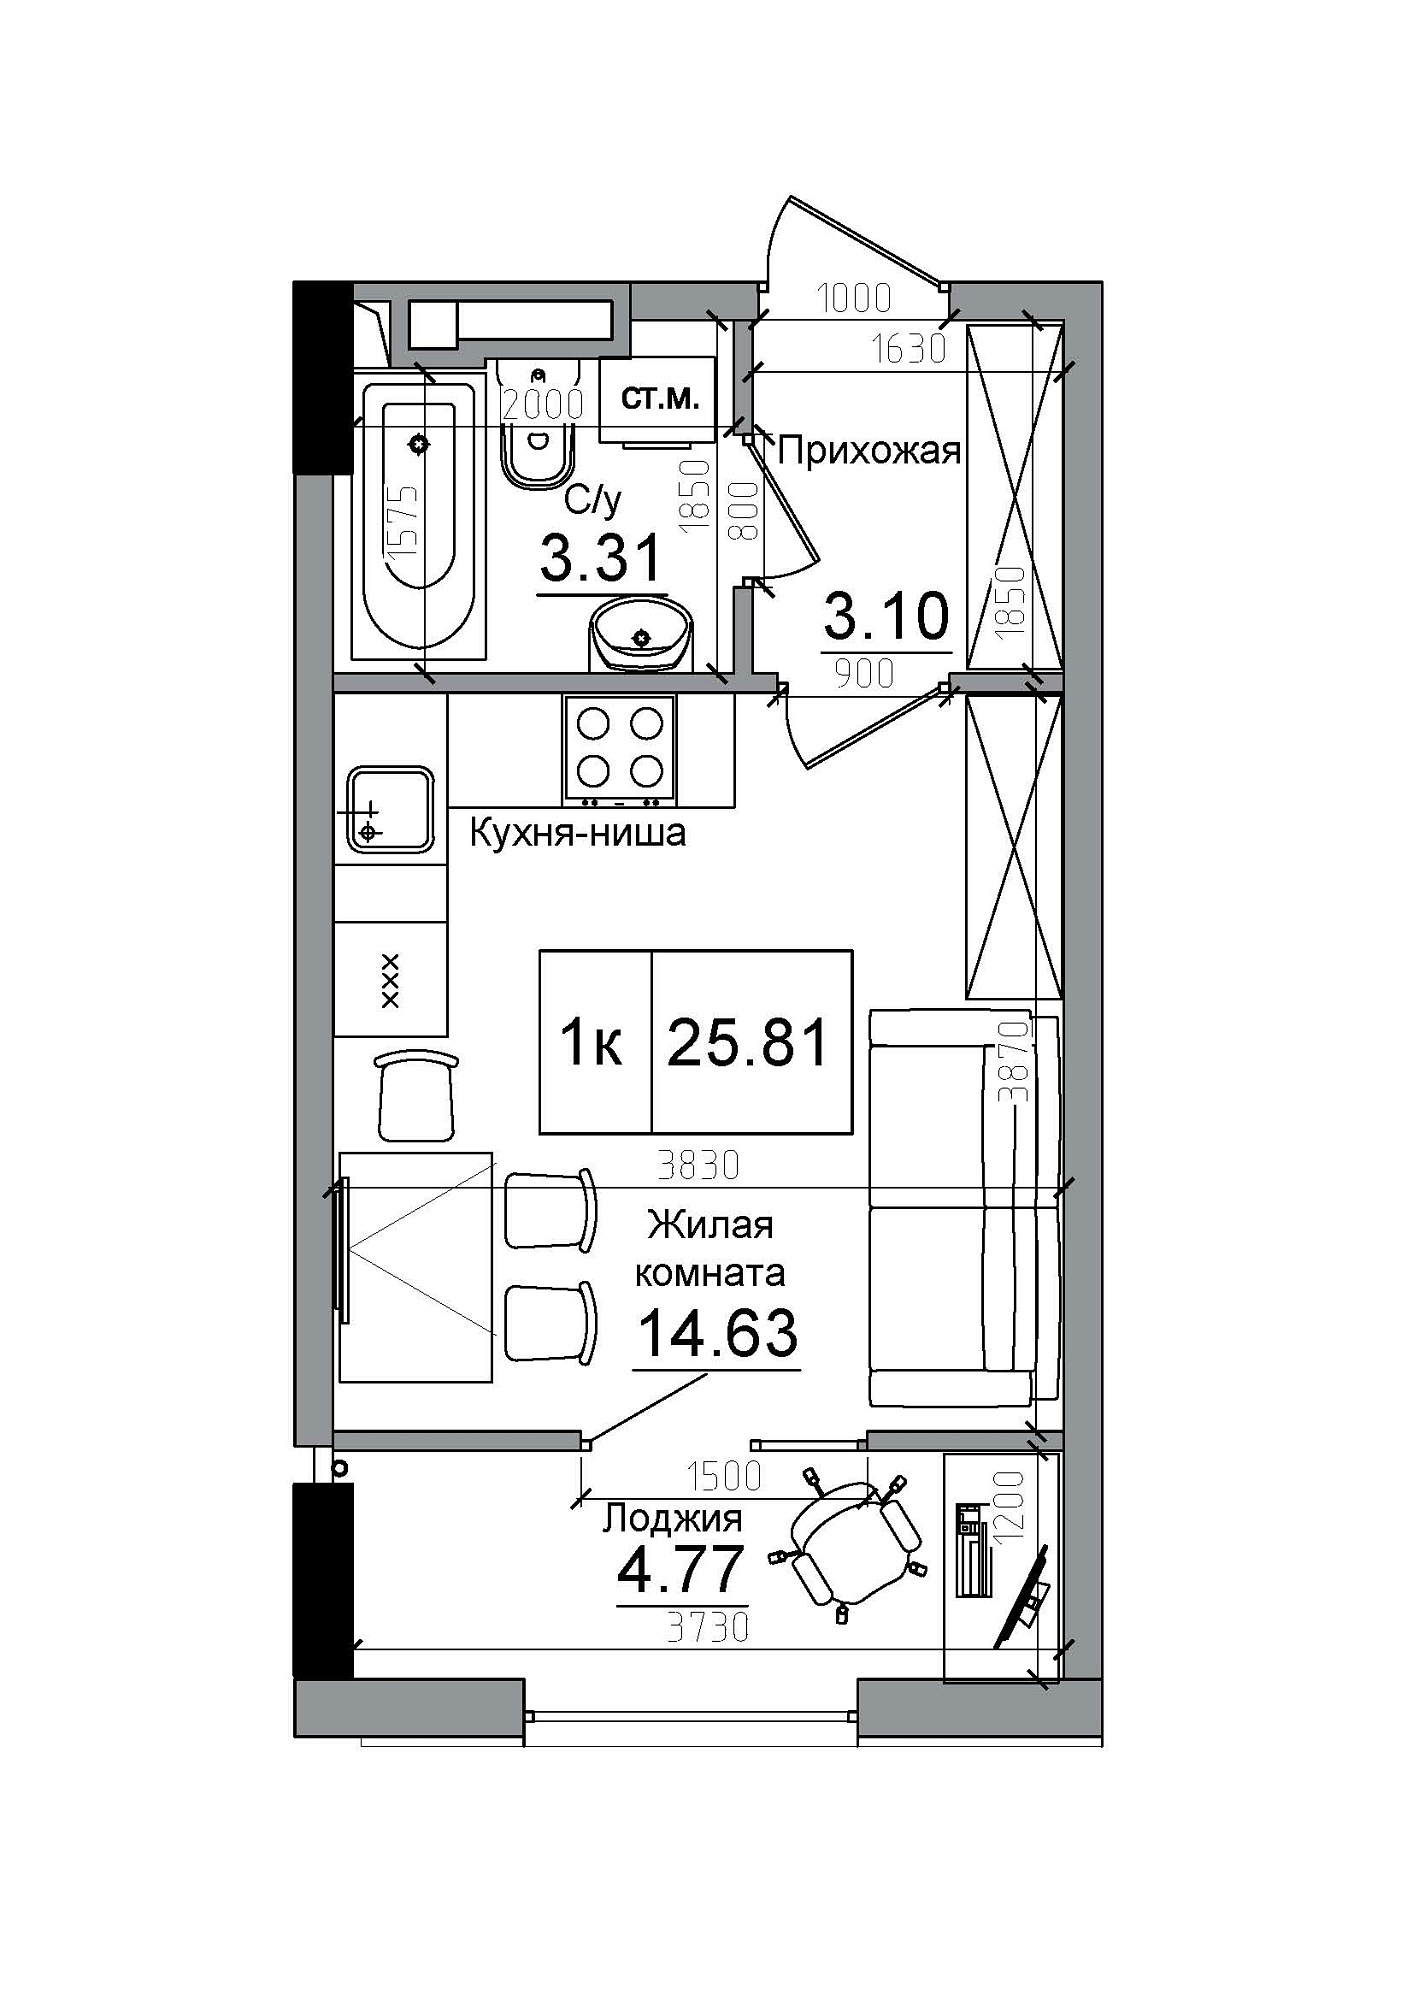 Planning Smart flats area 25.81m2, AB-12-07/00013.